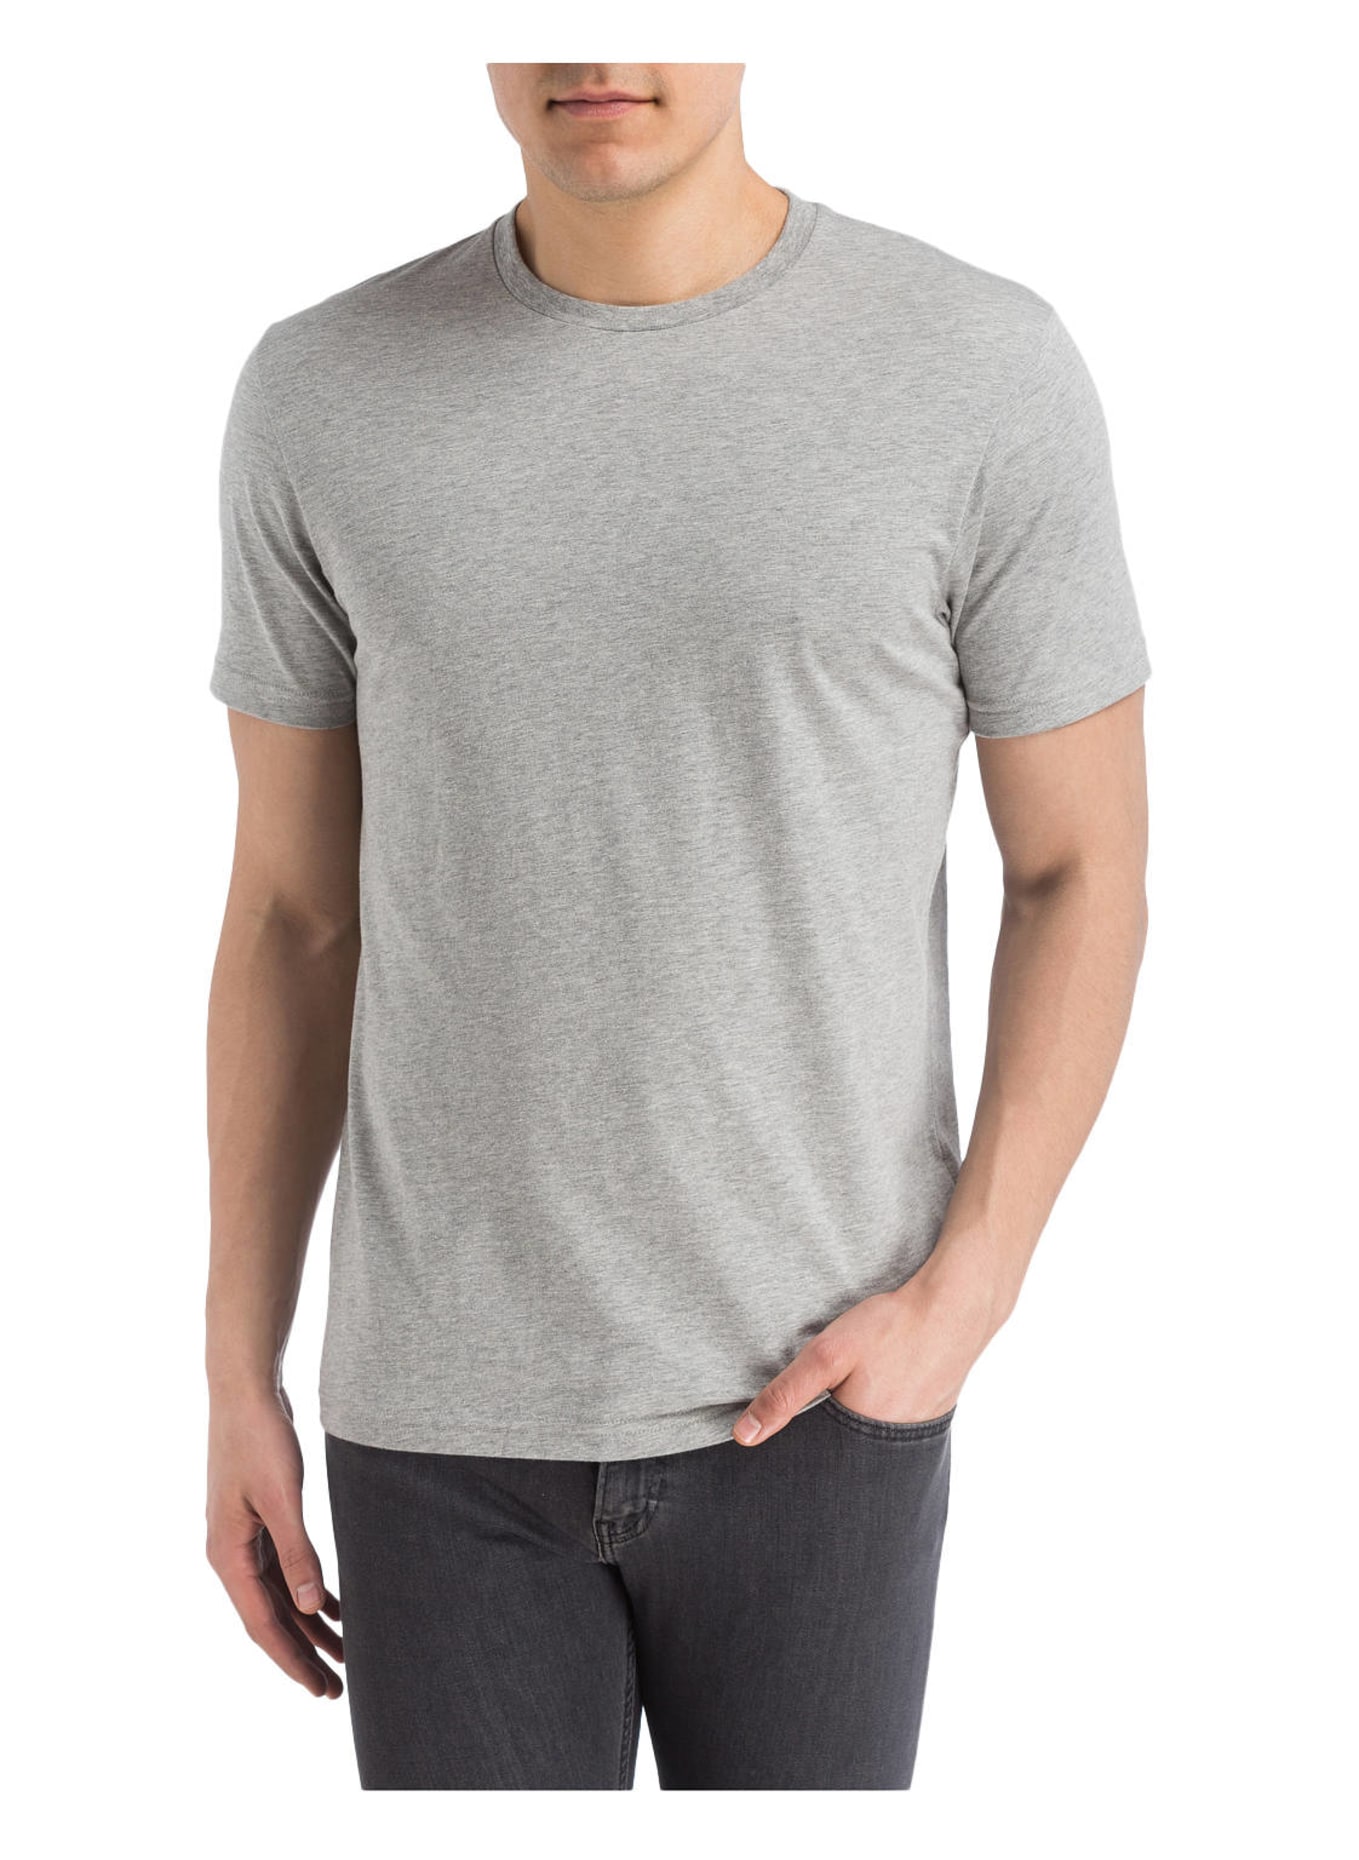 RAGMAN T-shirt regular fit in mélange gray